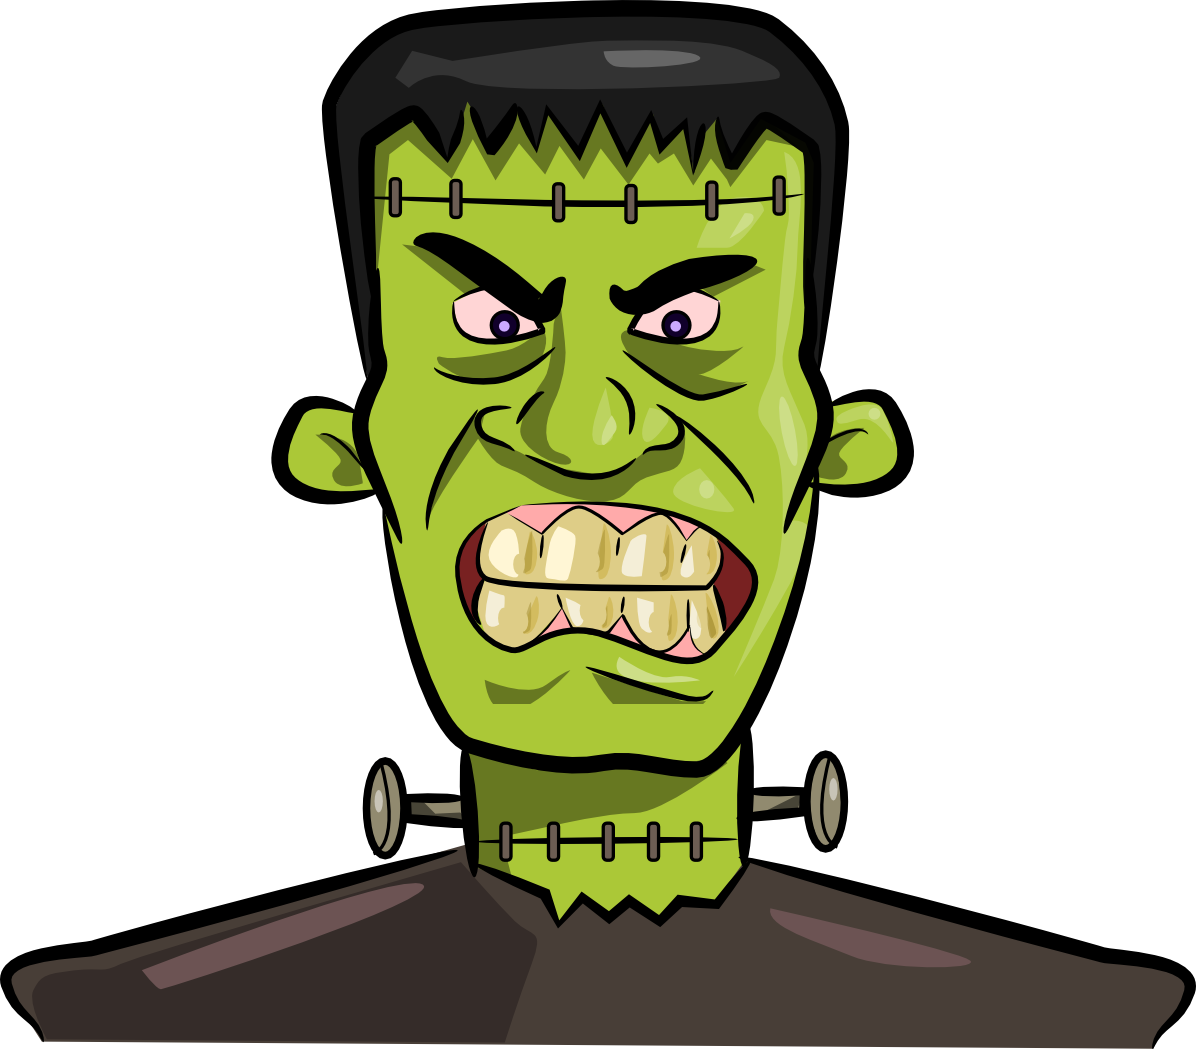 The Totally Free Clip Art Blog: Season - [Halloween] Frankenstein